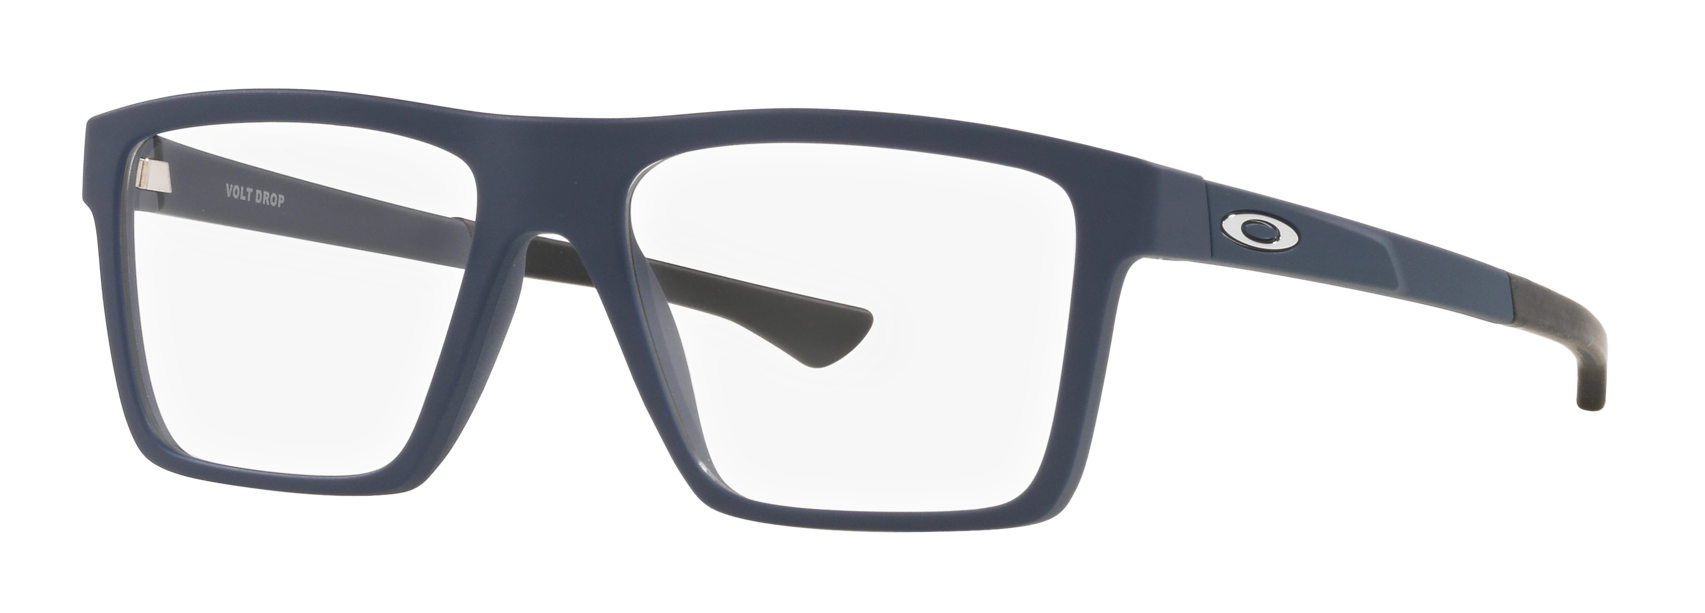 Oakley Volt Drop eyeglasses in satin blue nylon frame with clear square lenses.